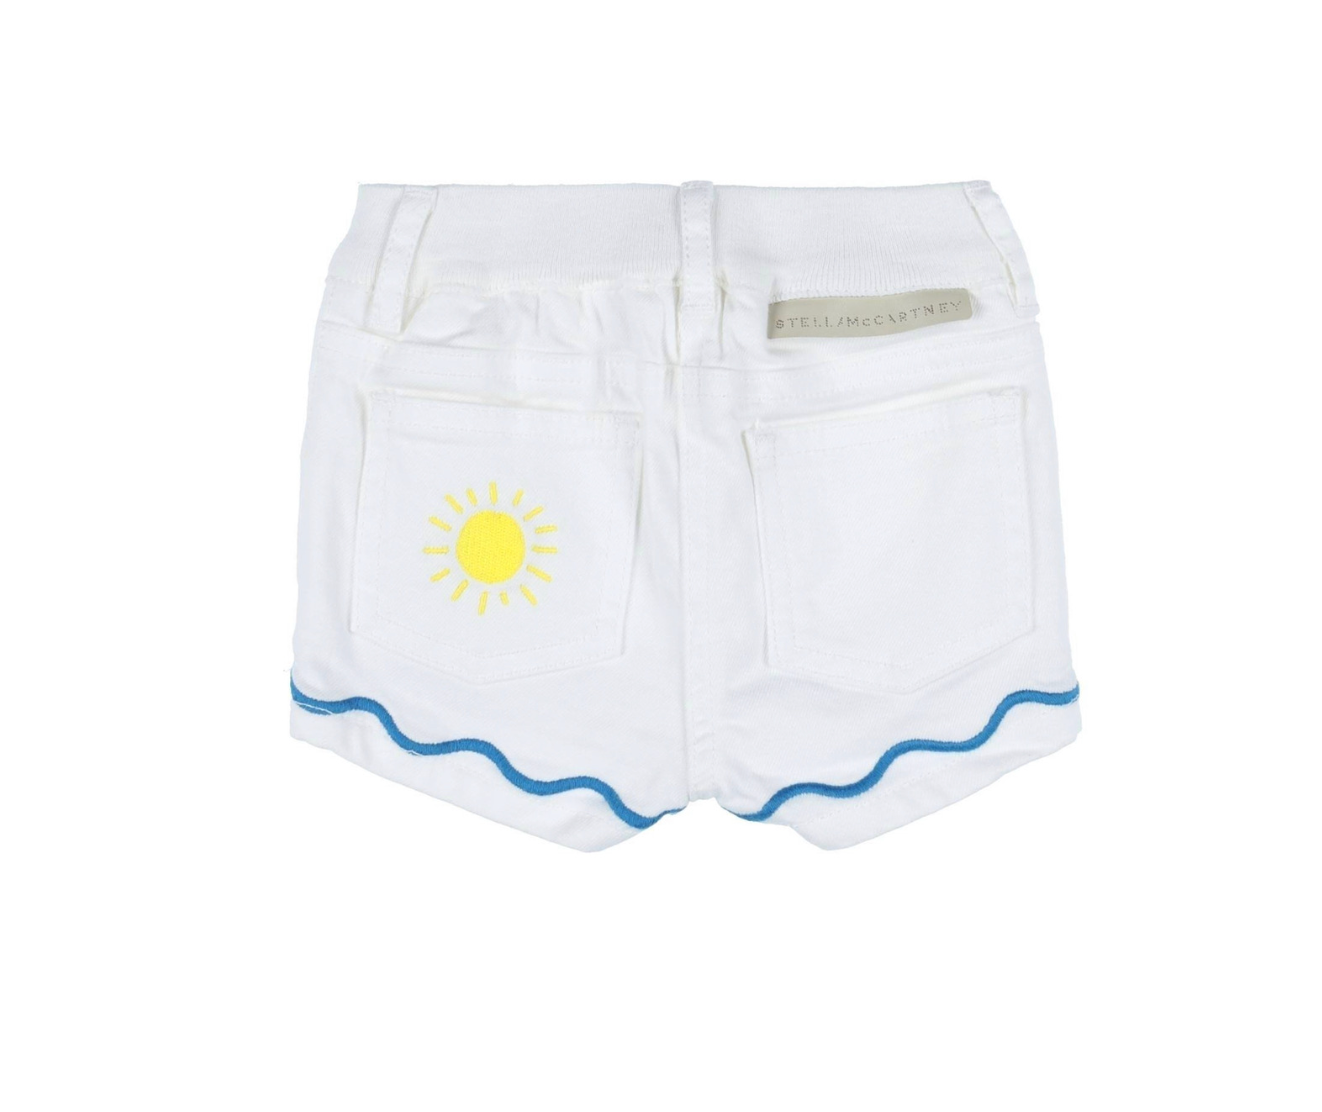 STELLA MCCARTNEY - White denim shorts - 9 months